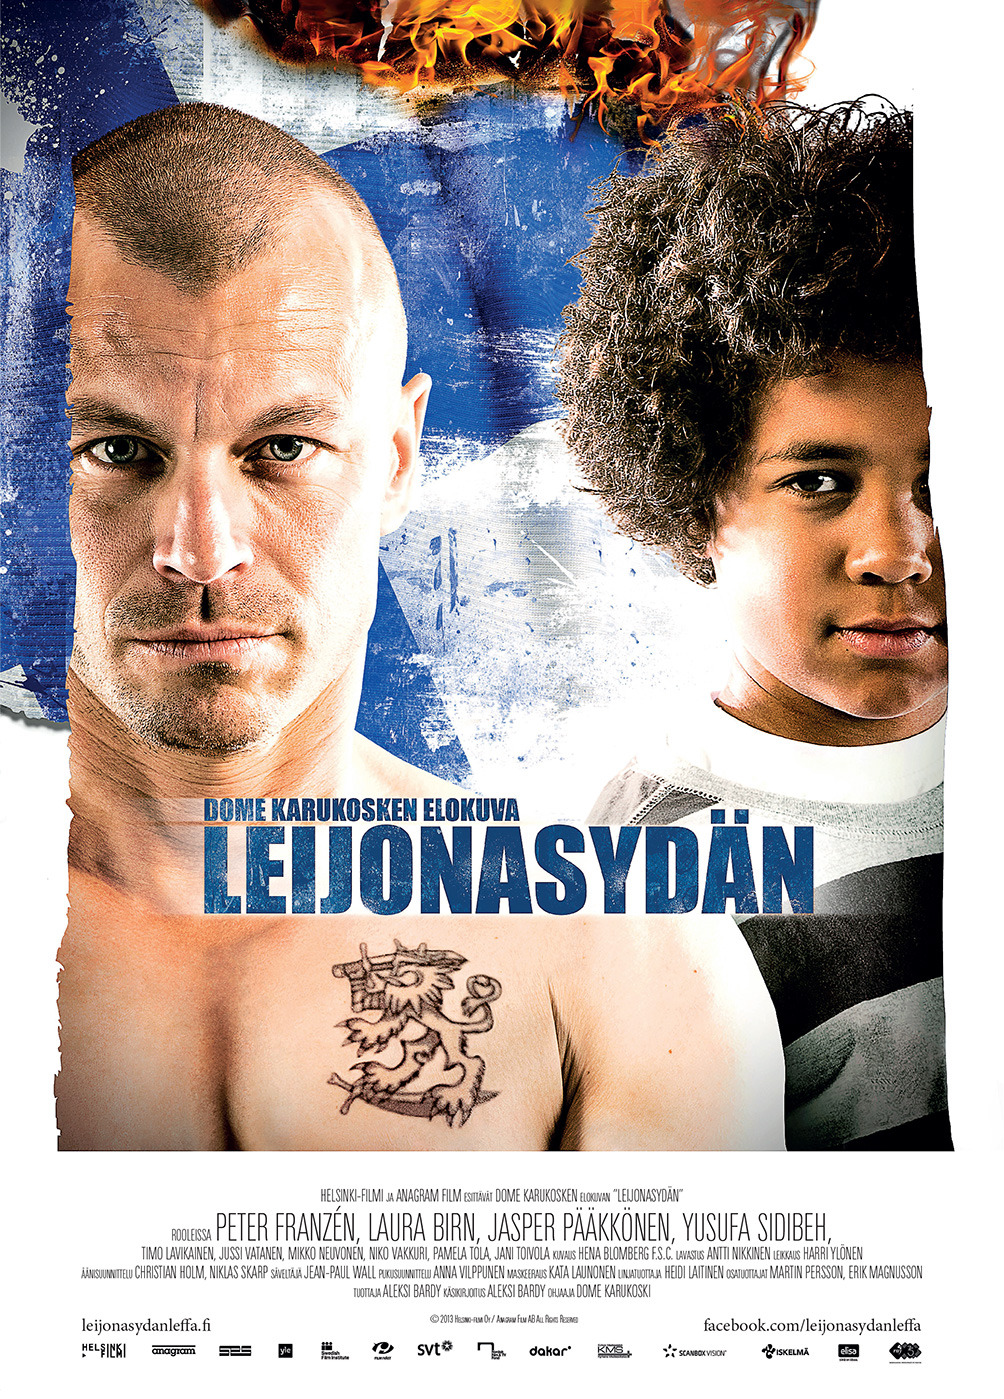 Extra Large Movie Poster Image for Leijonasydän 